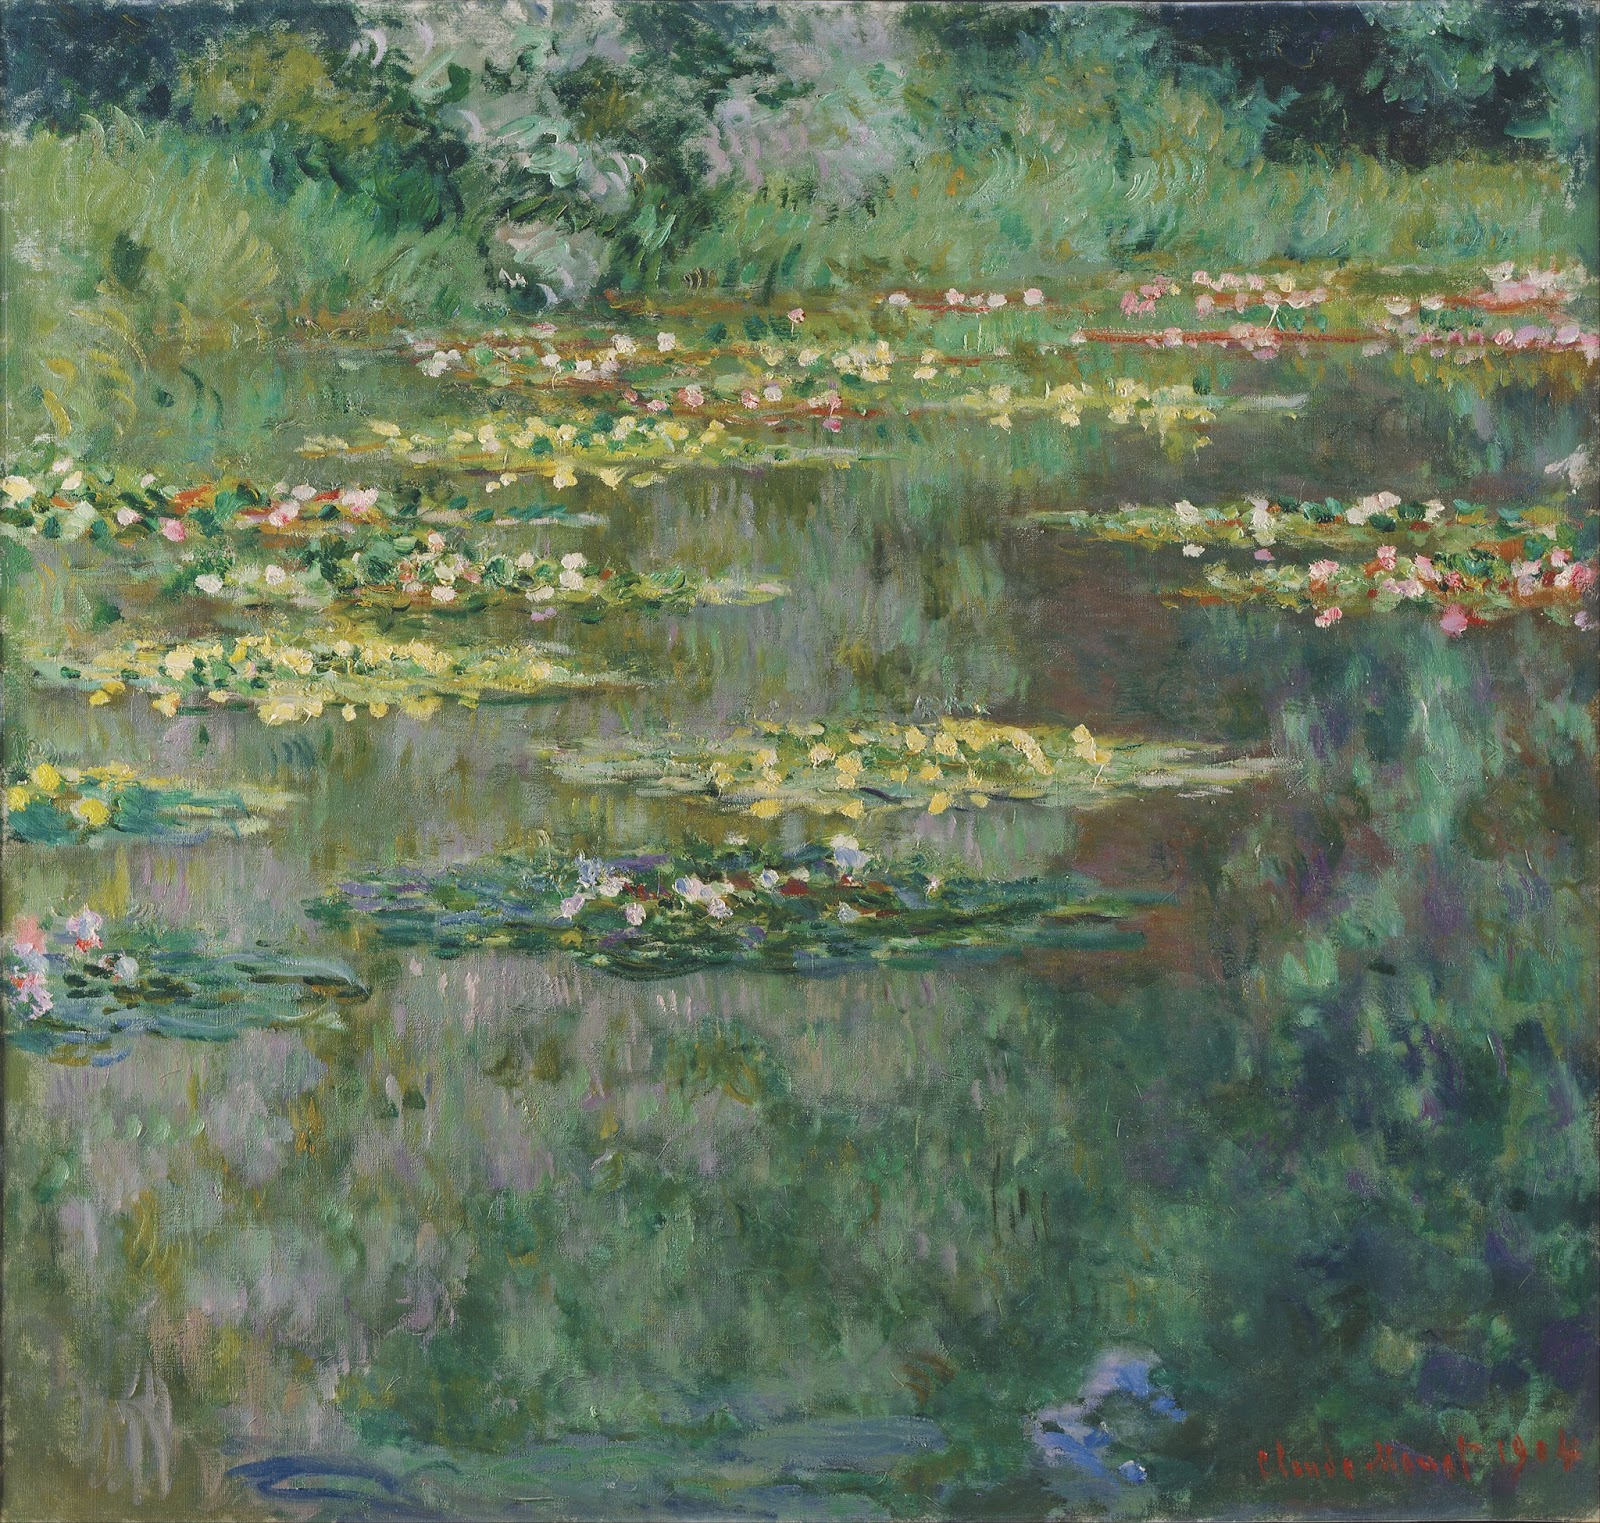 Claude+Monet-1840-1926 (426).jpg